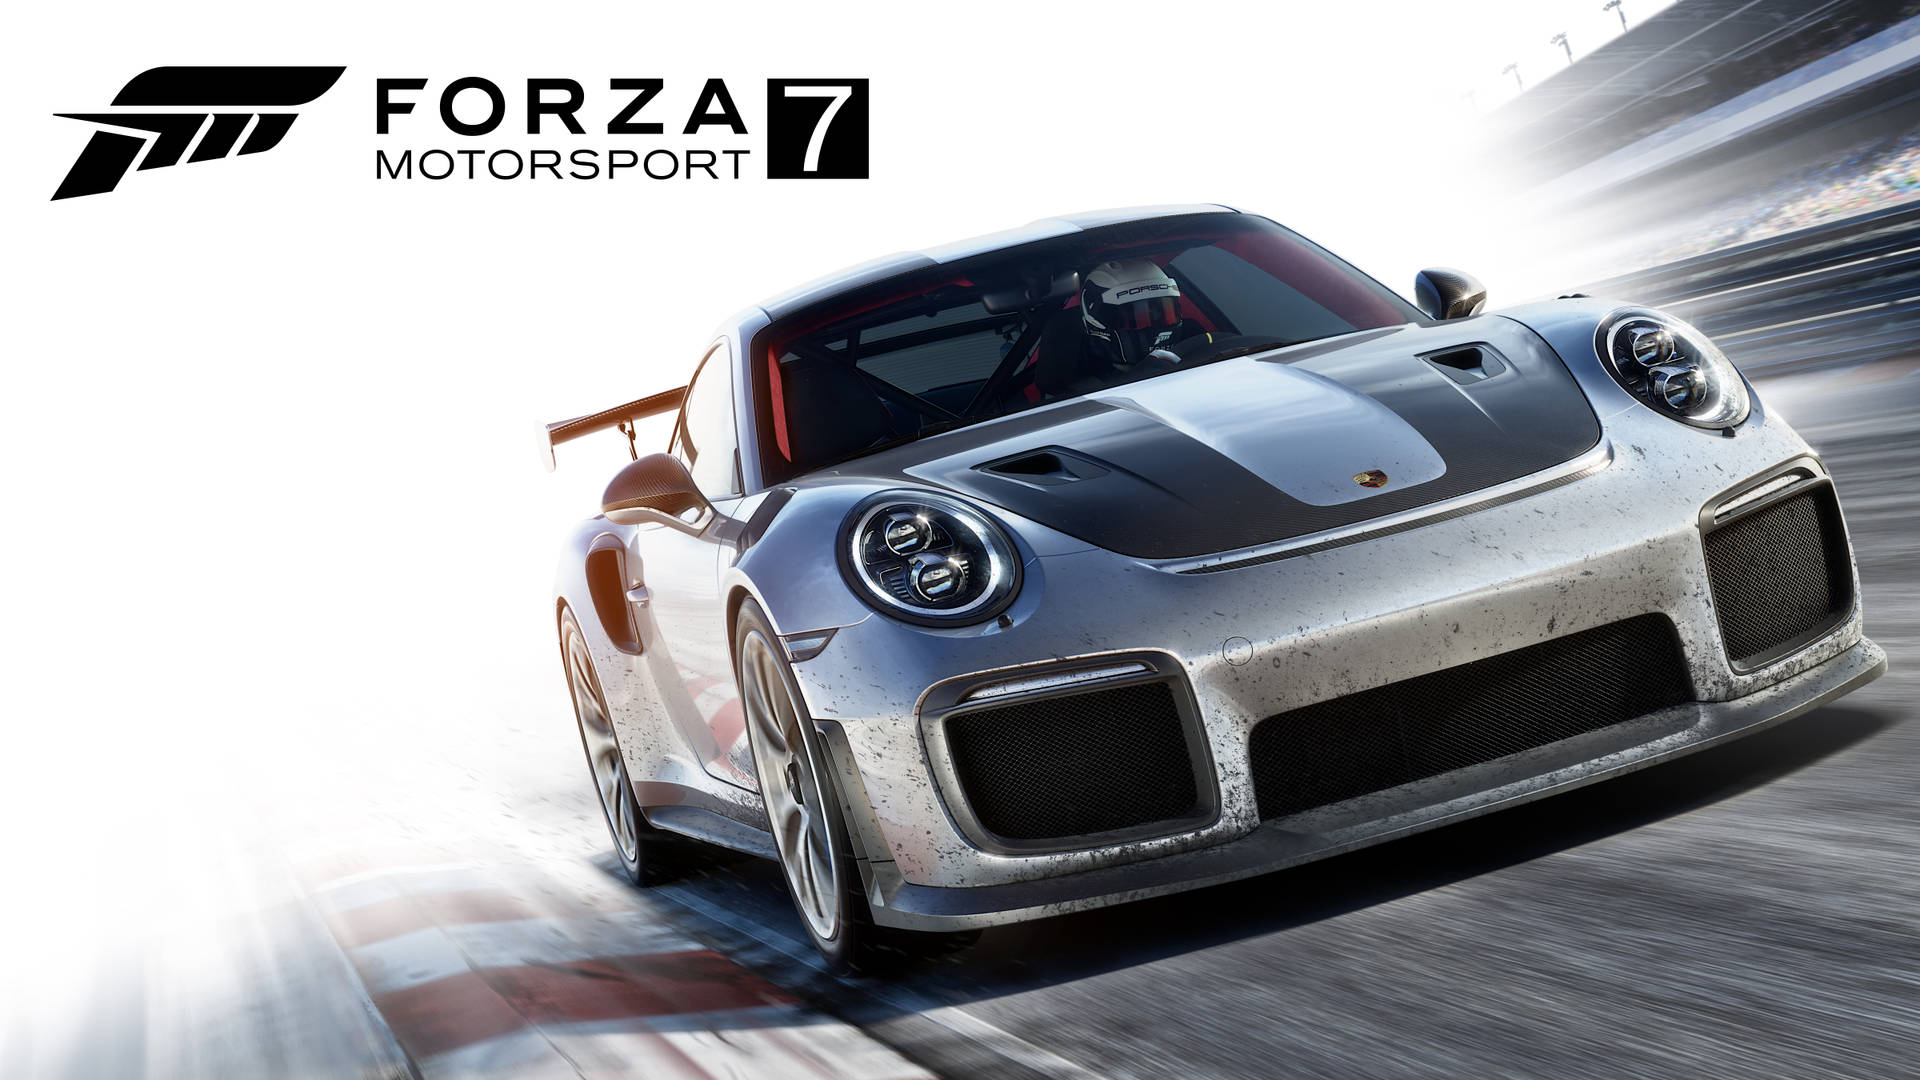 Cochemodelo De Forza Motorsport 7 Fondo de pantalla